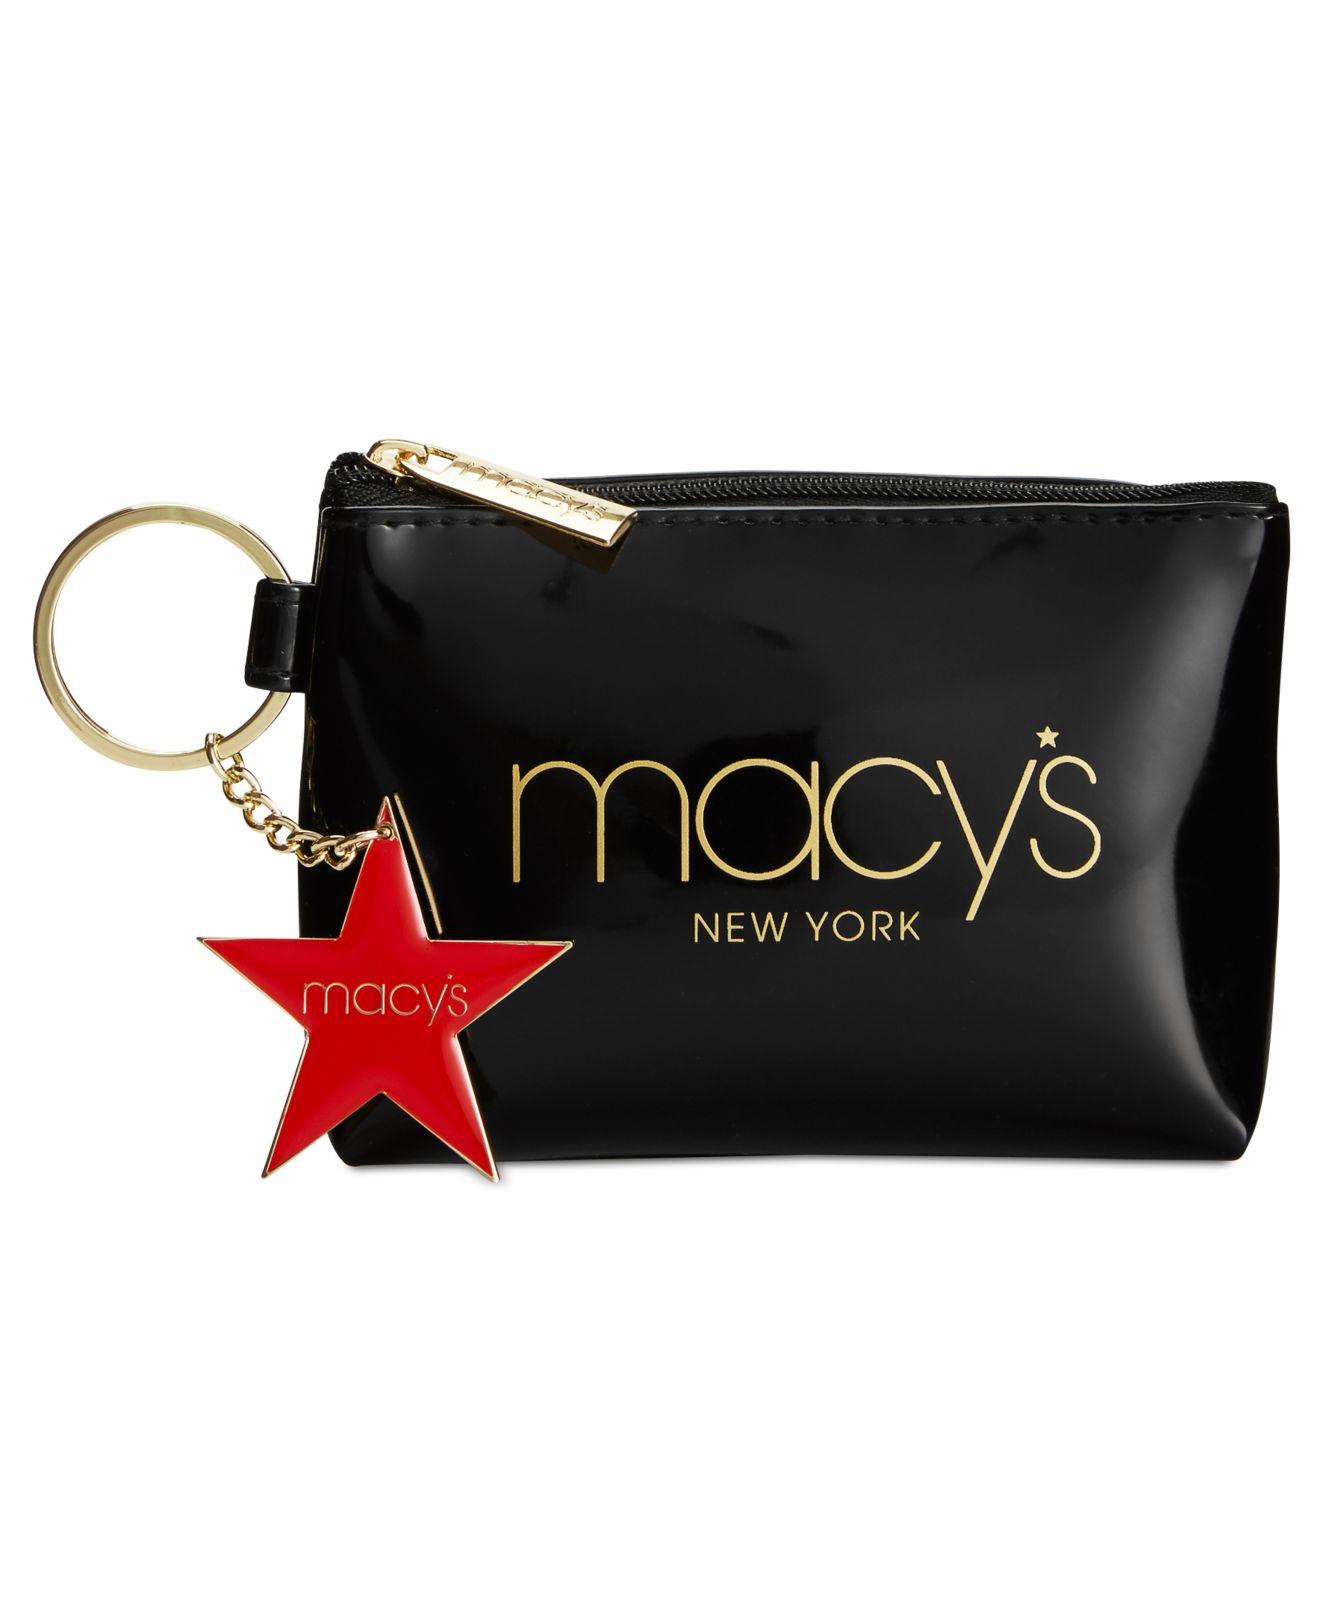 Blue Handbags Michael Kors: Purses, Bags, Sunglasses & More - Macy's